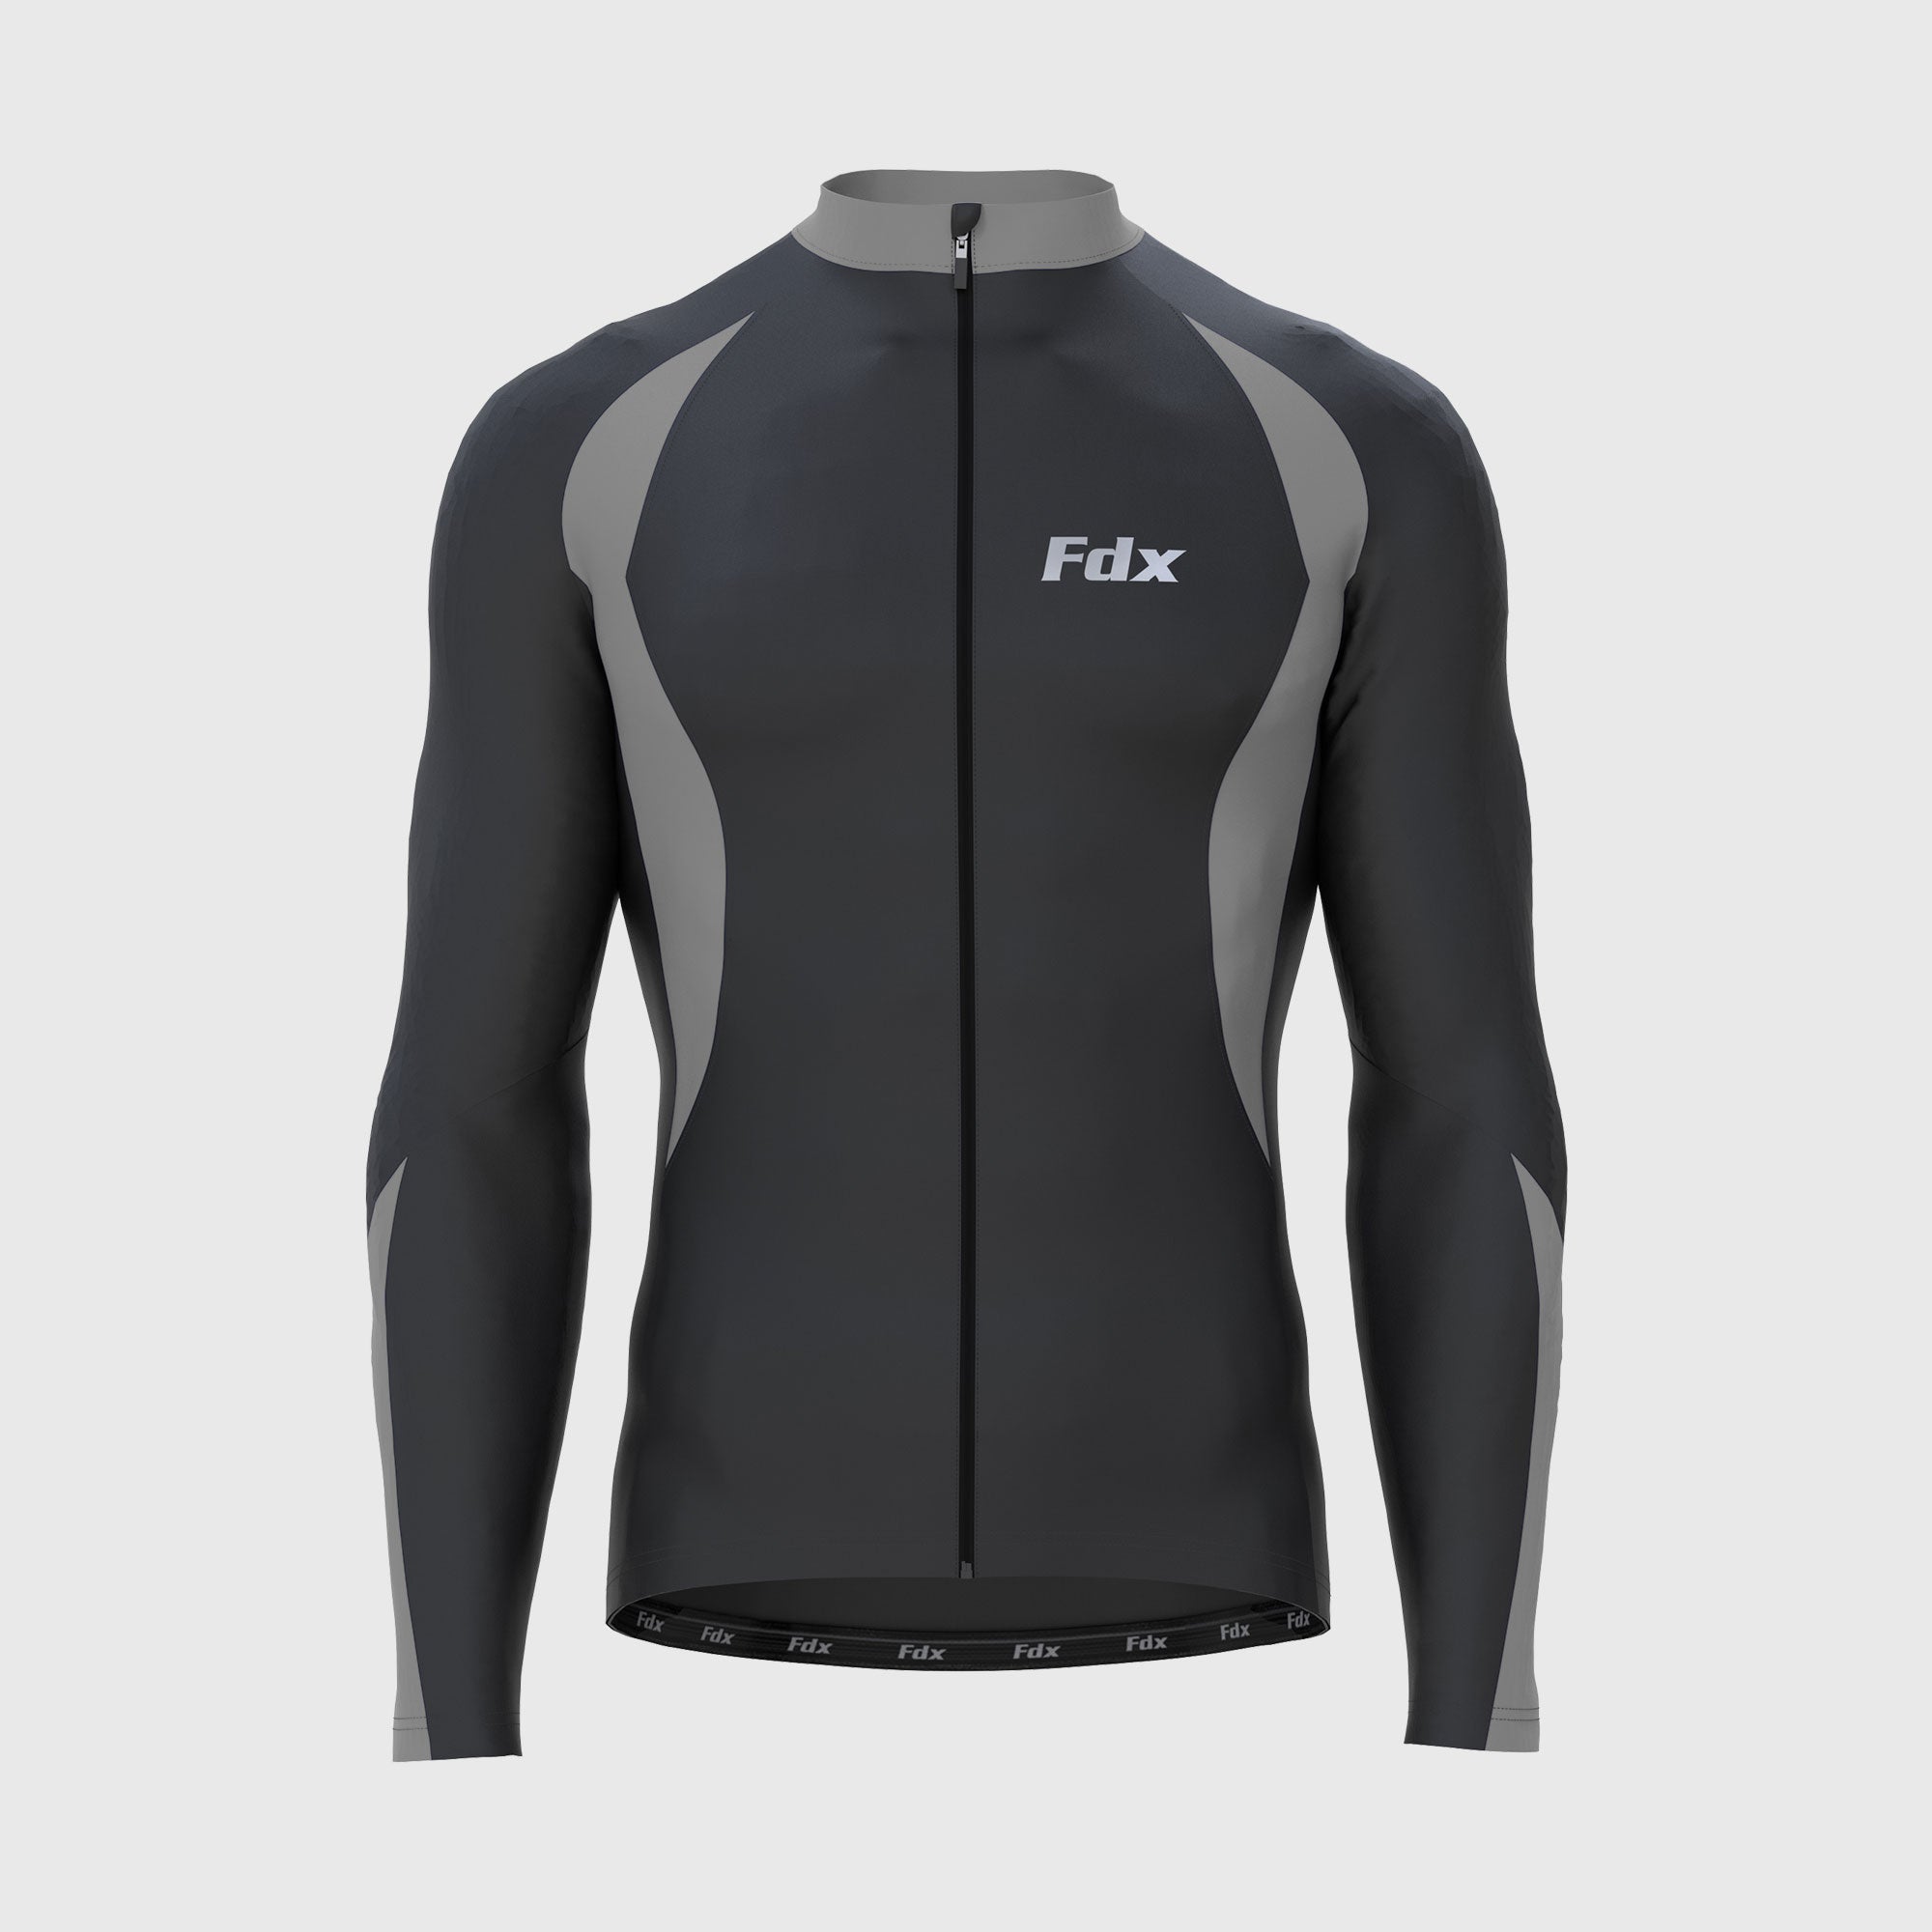 Fdx Mens Black & Grey Long Sleeve Cycling Jersey for Winter Roubaix Thermal Fleece Road Bike Wear Top Full Zipper, Pockets & Hi-viz Reflectors - Viper